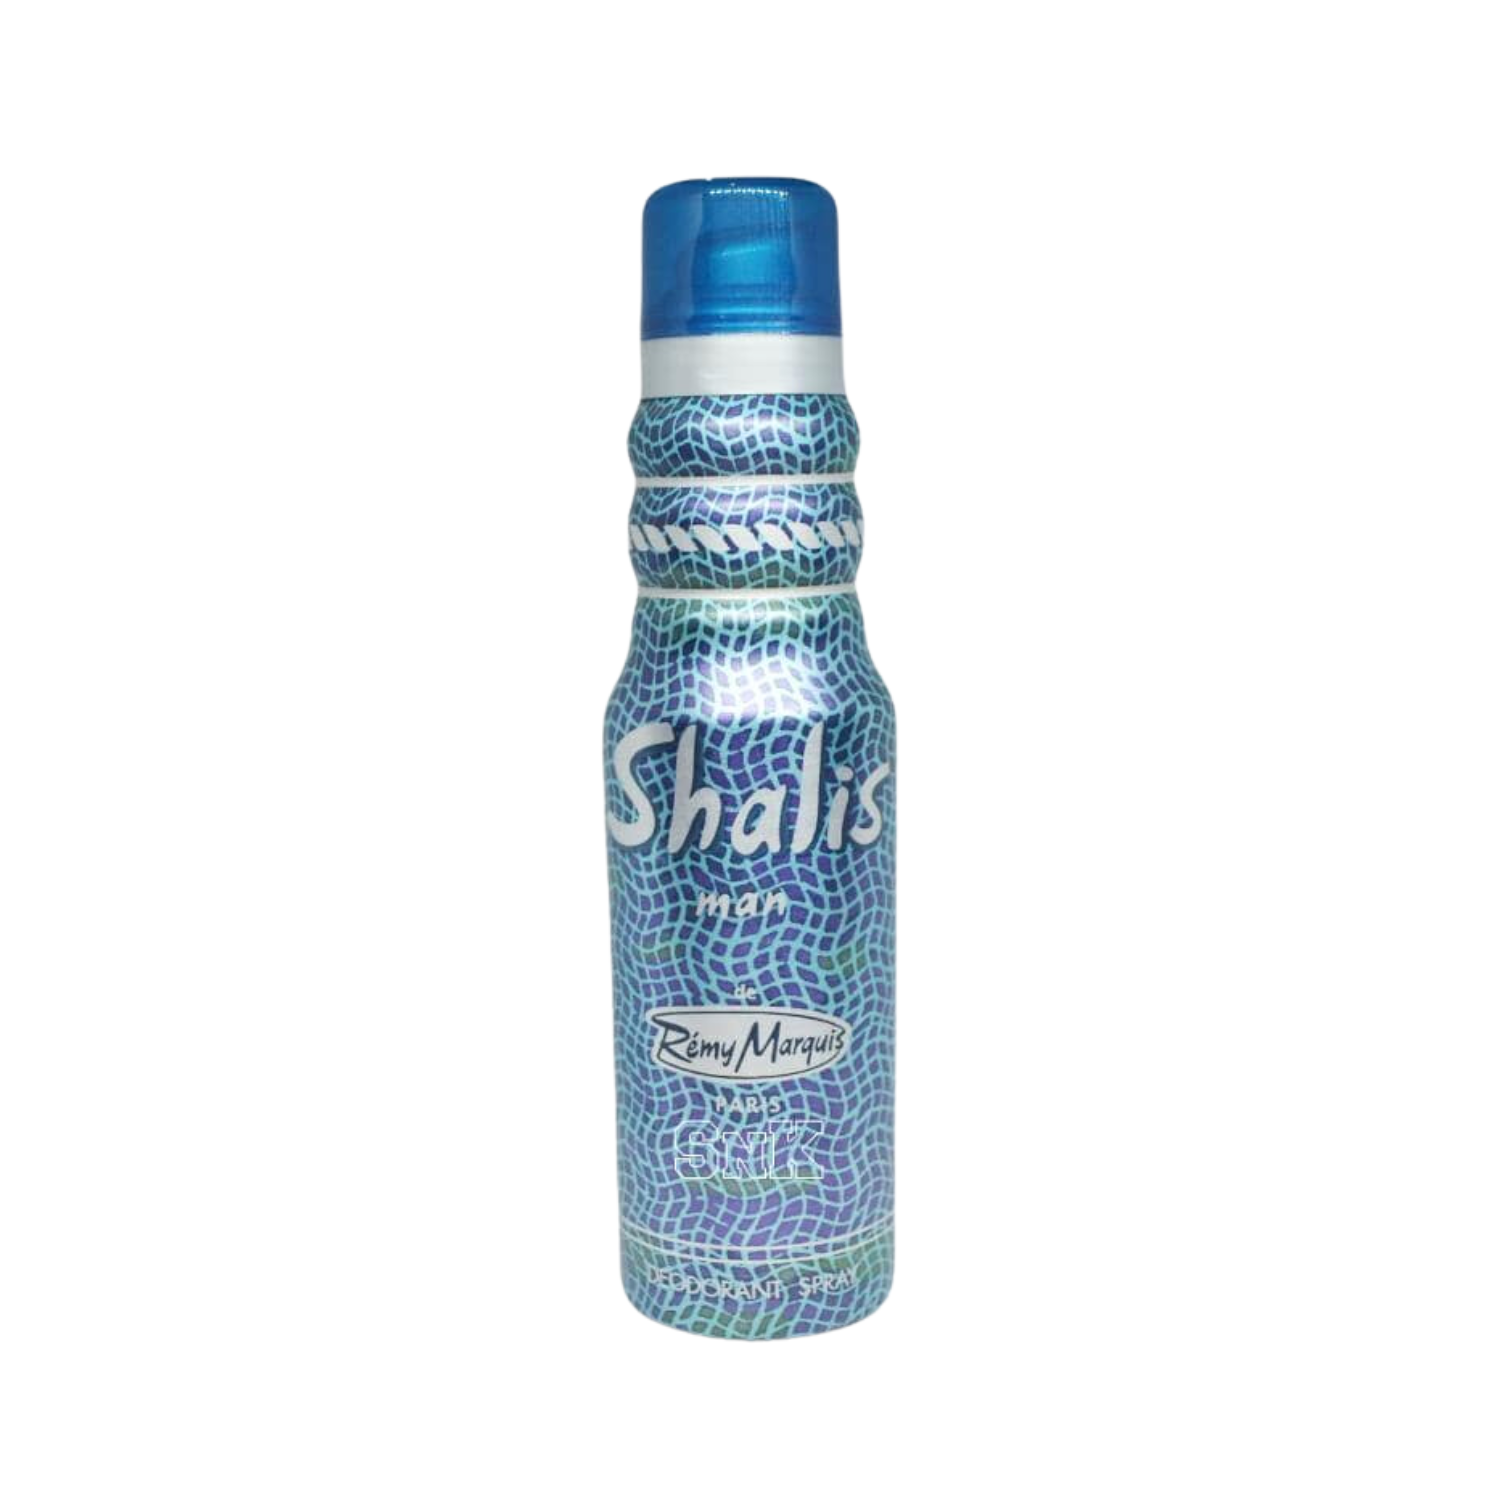 remy-marquis-shalis-body-spray-deodorant-for-men-175ml